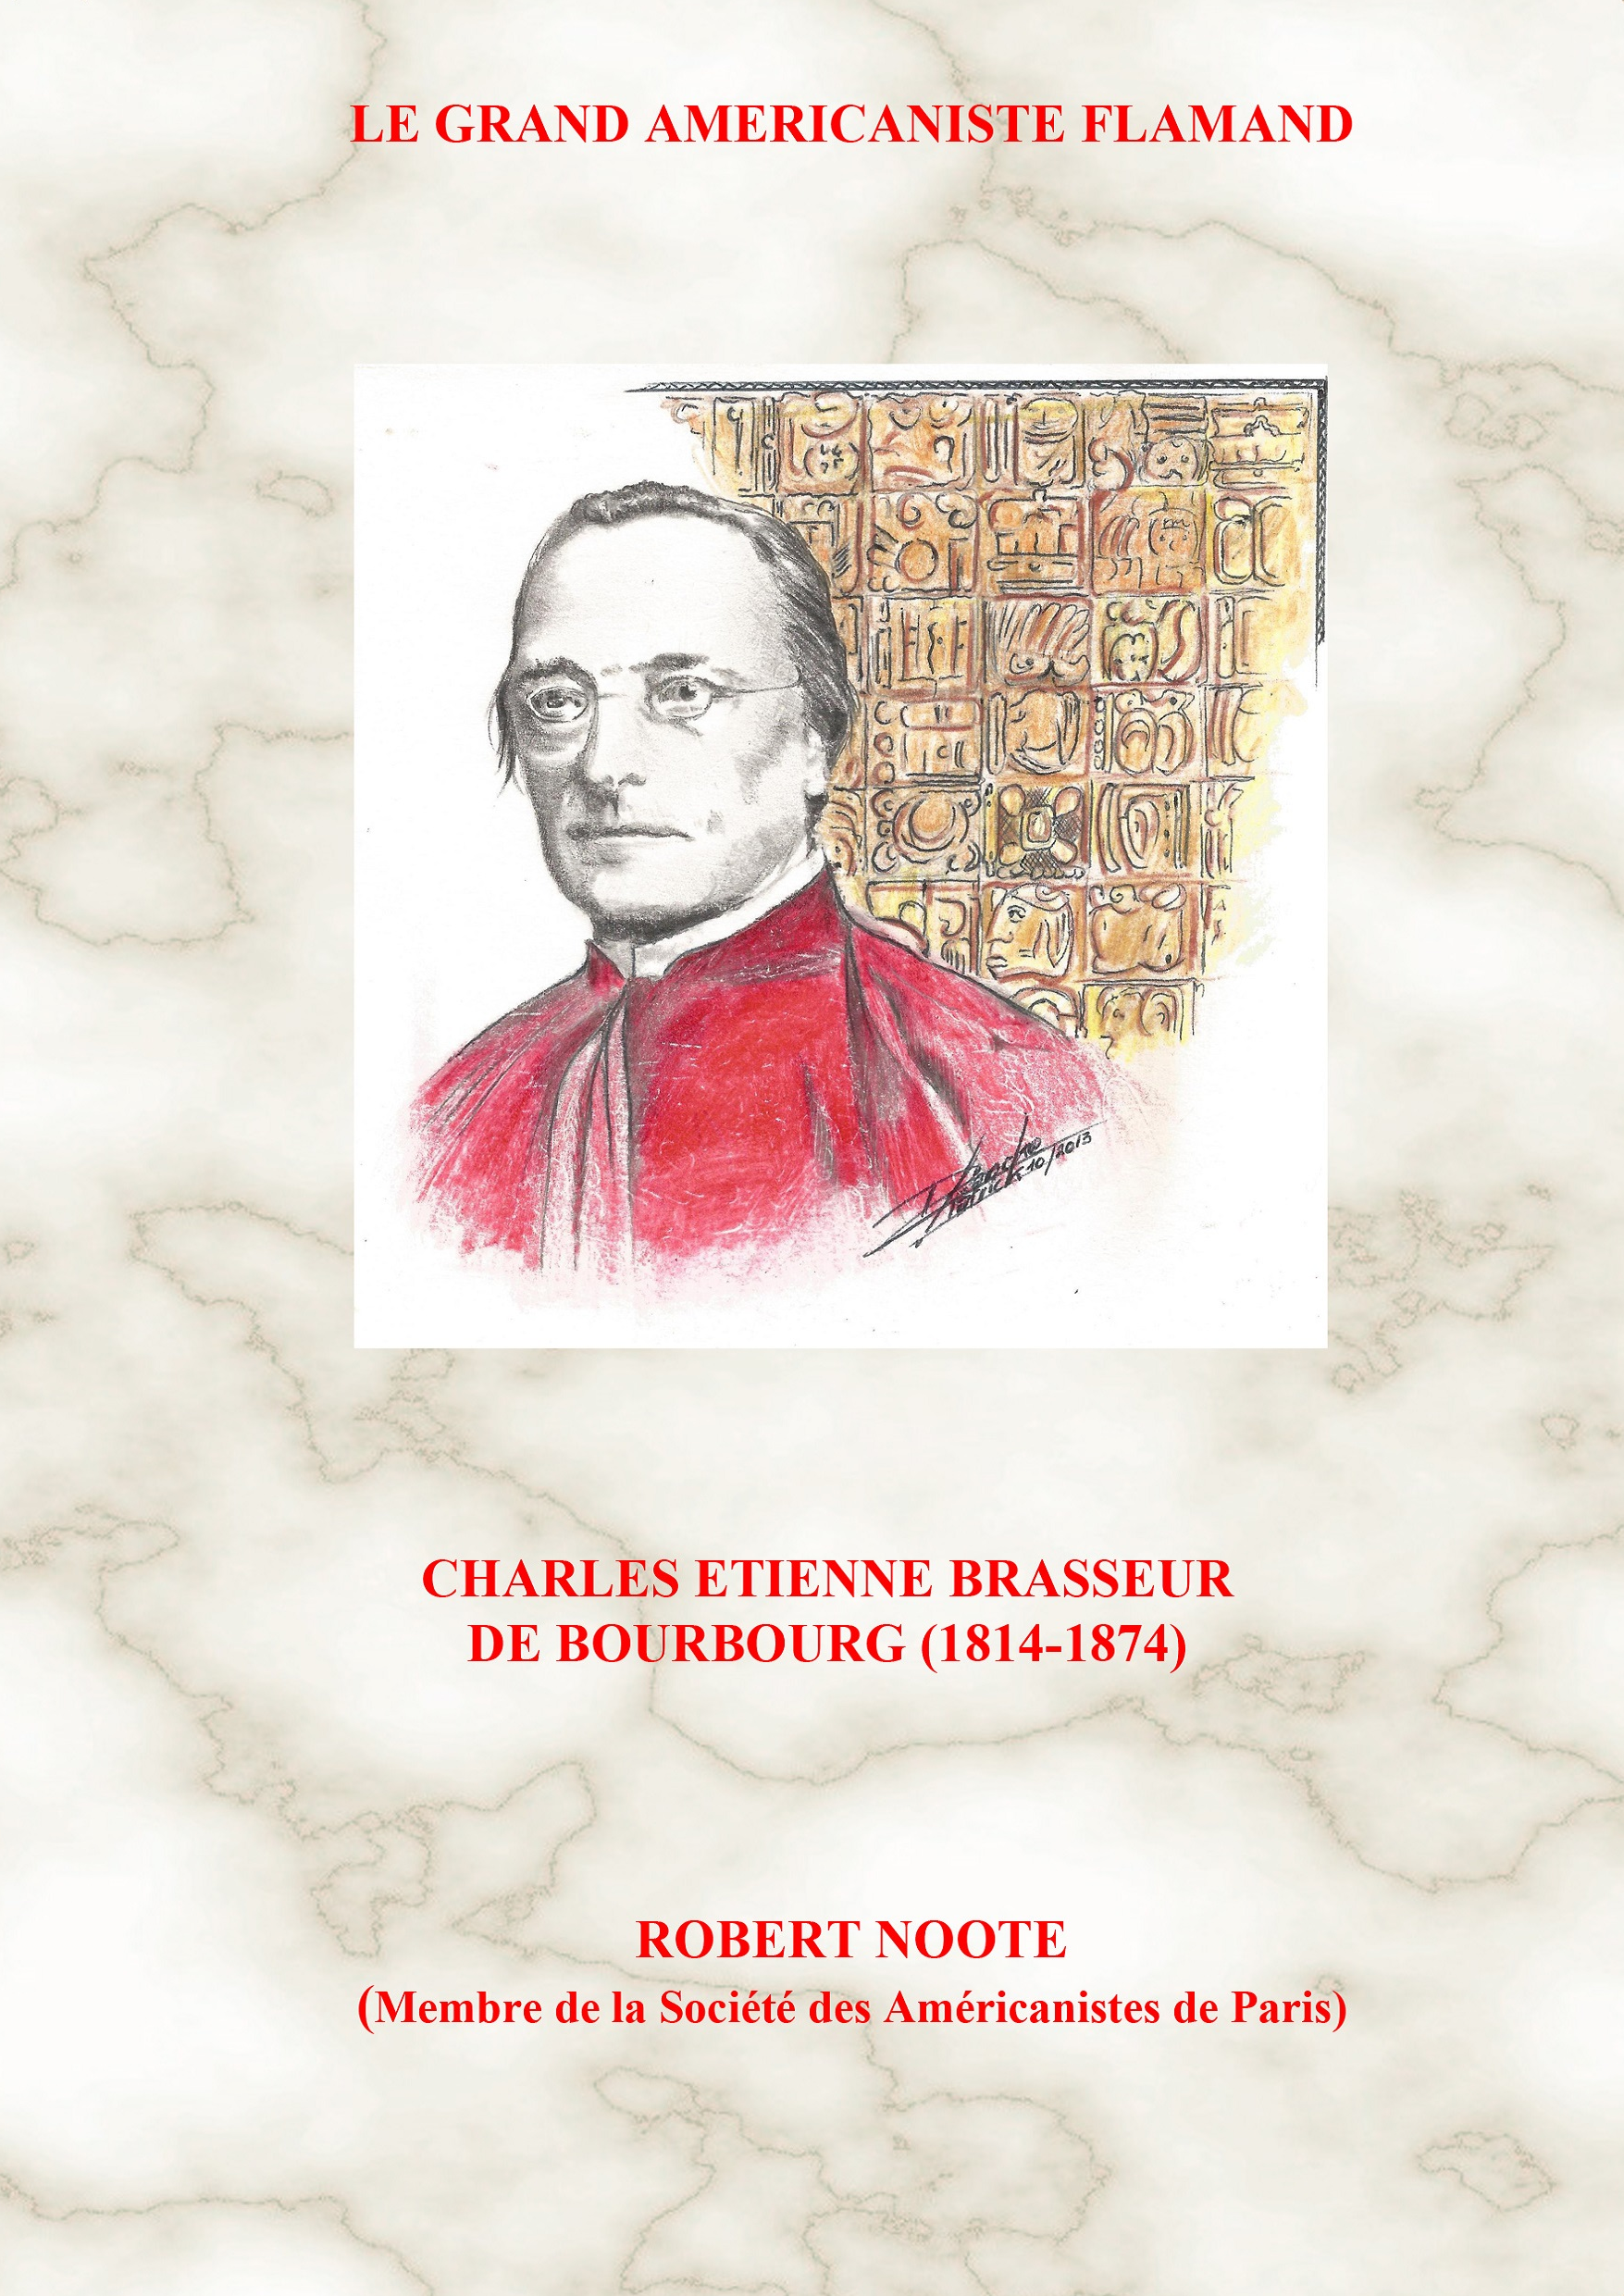 CHARLES ETIENNE BRASSEUR DE BOURBOURG